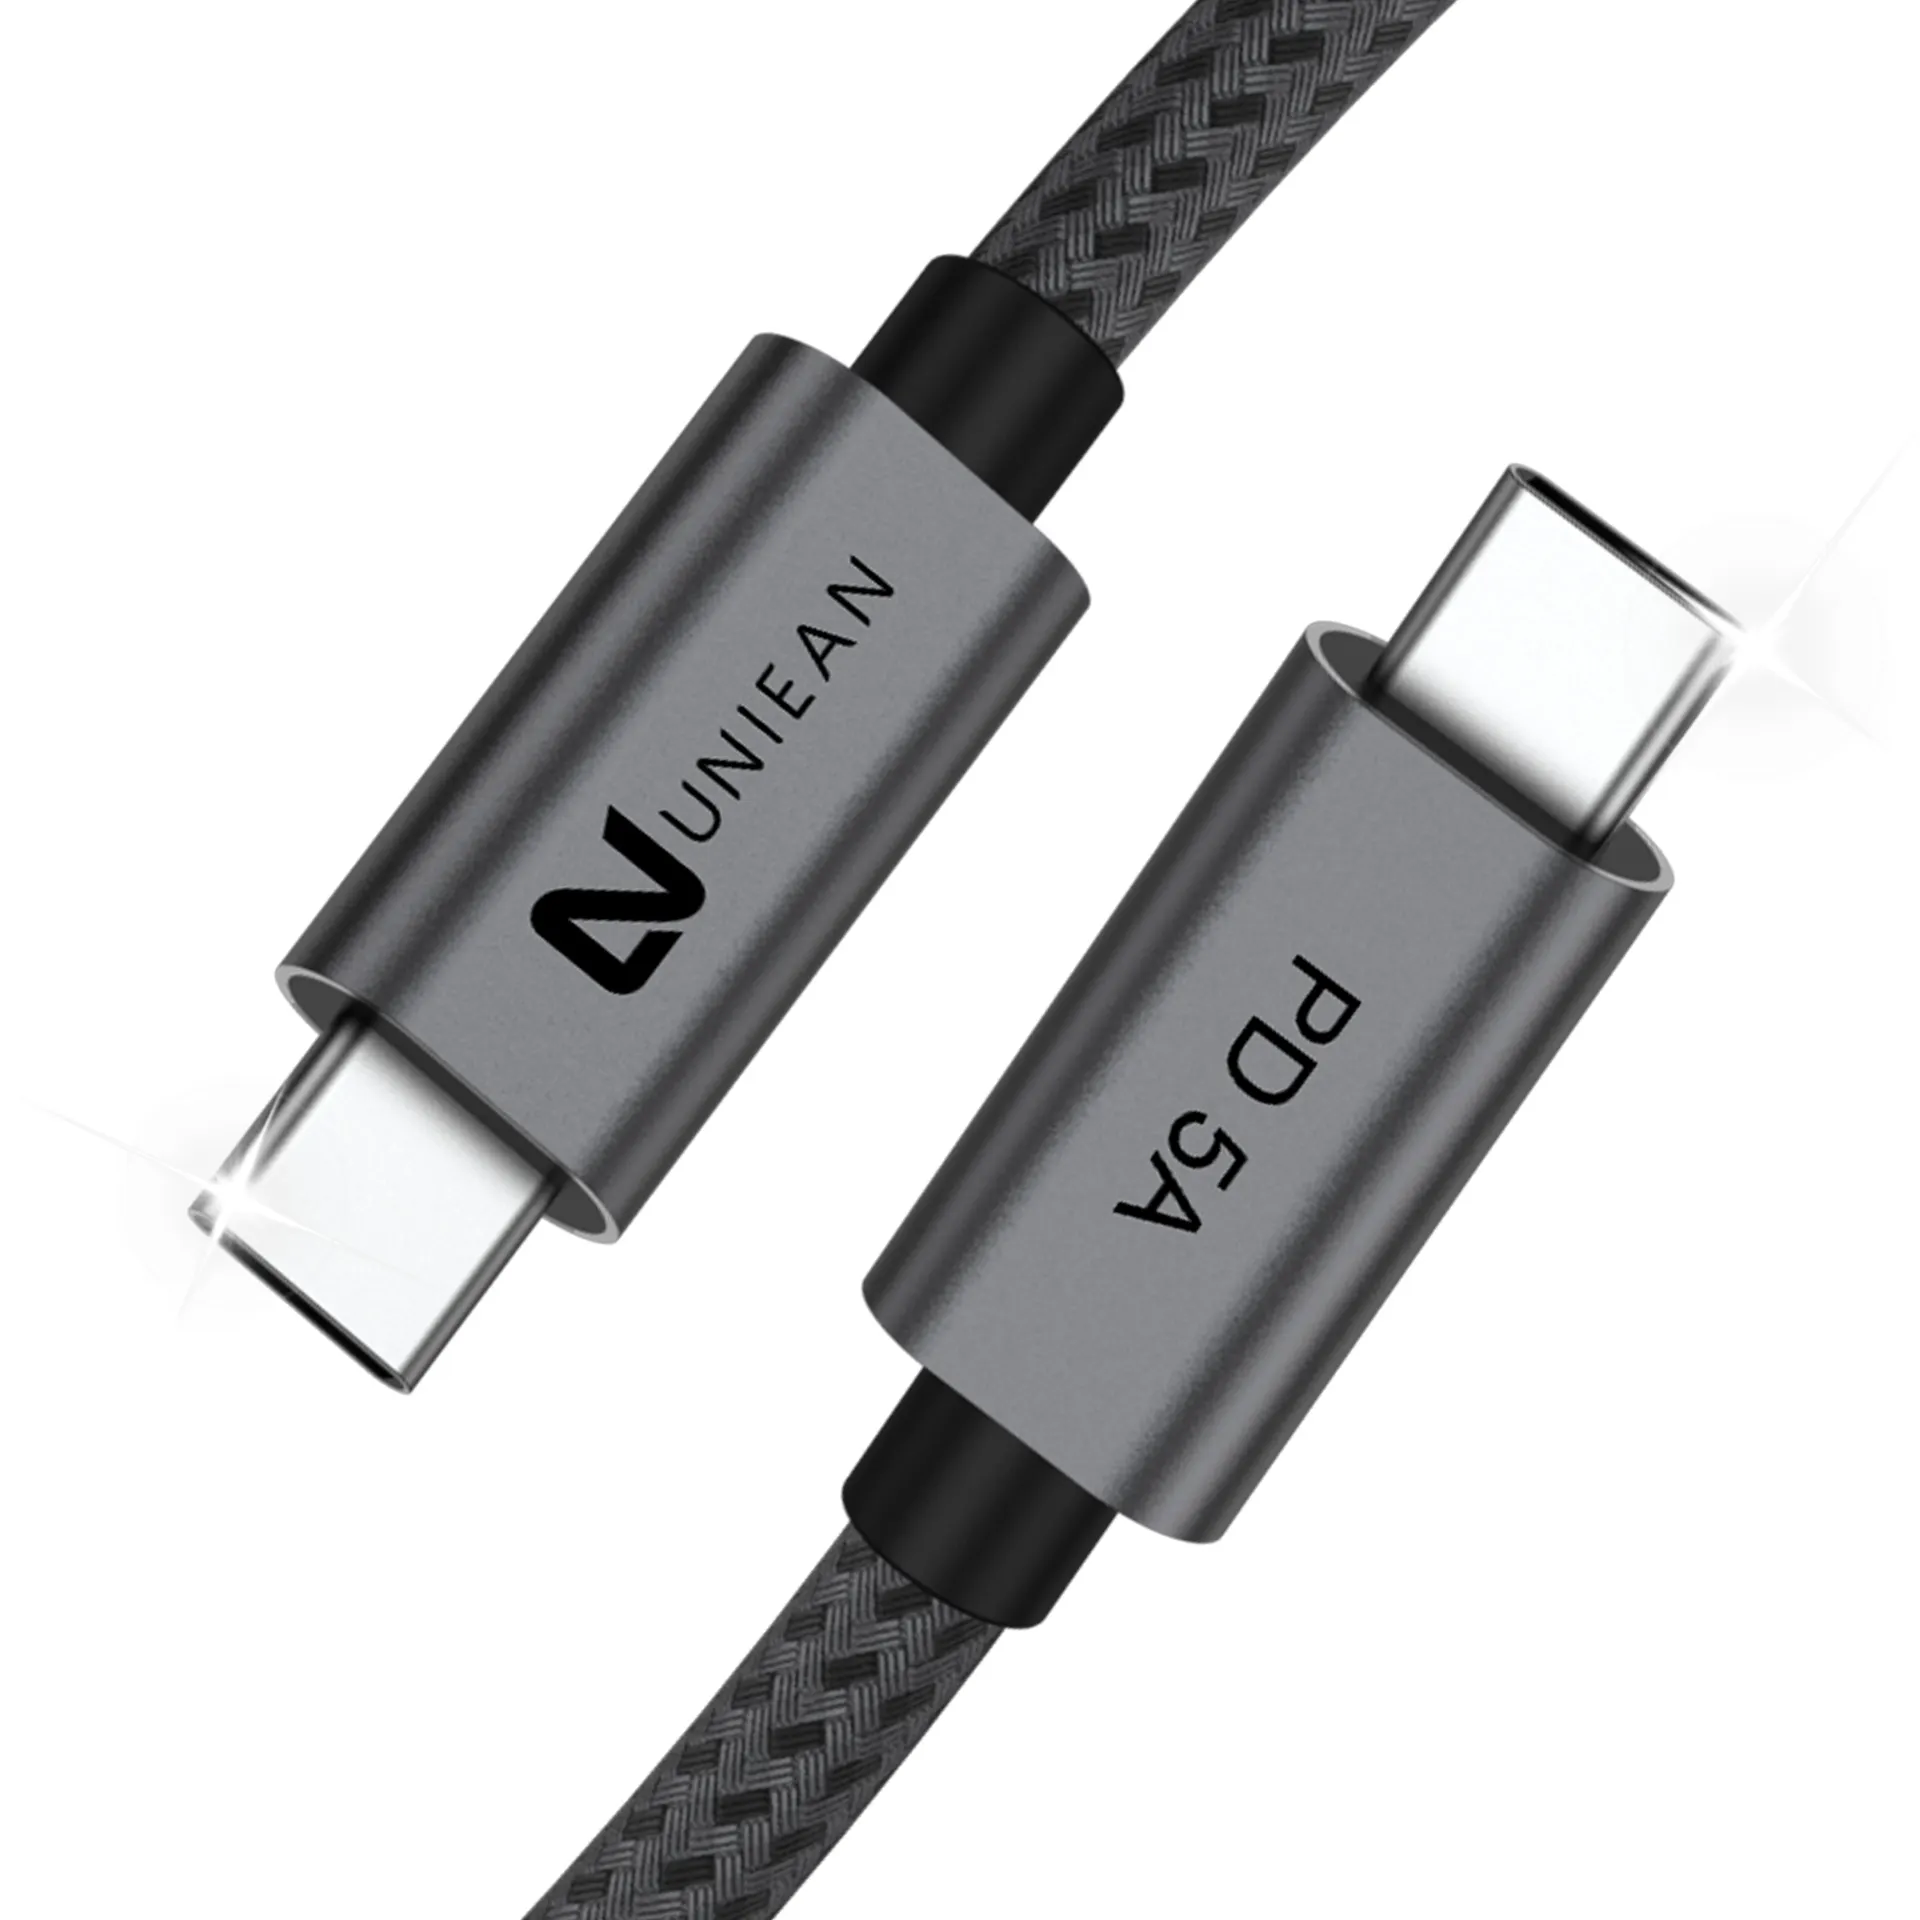 Kabel pengisi daya Cepat tipe C, kabel USB 3.2 Gen2 USB C ke kabel USB C PD100W 5A untuk ponsel Tablet Mac Book